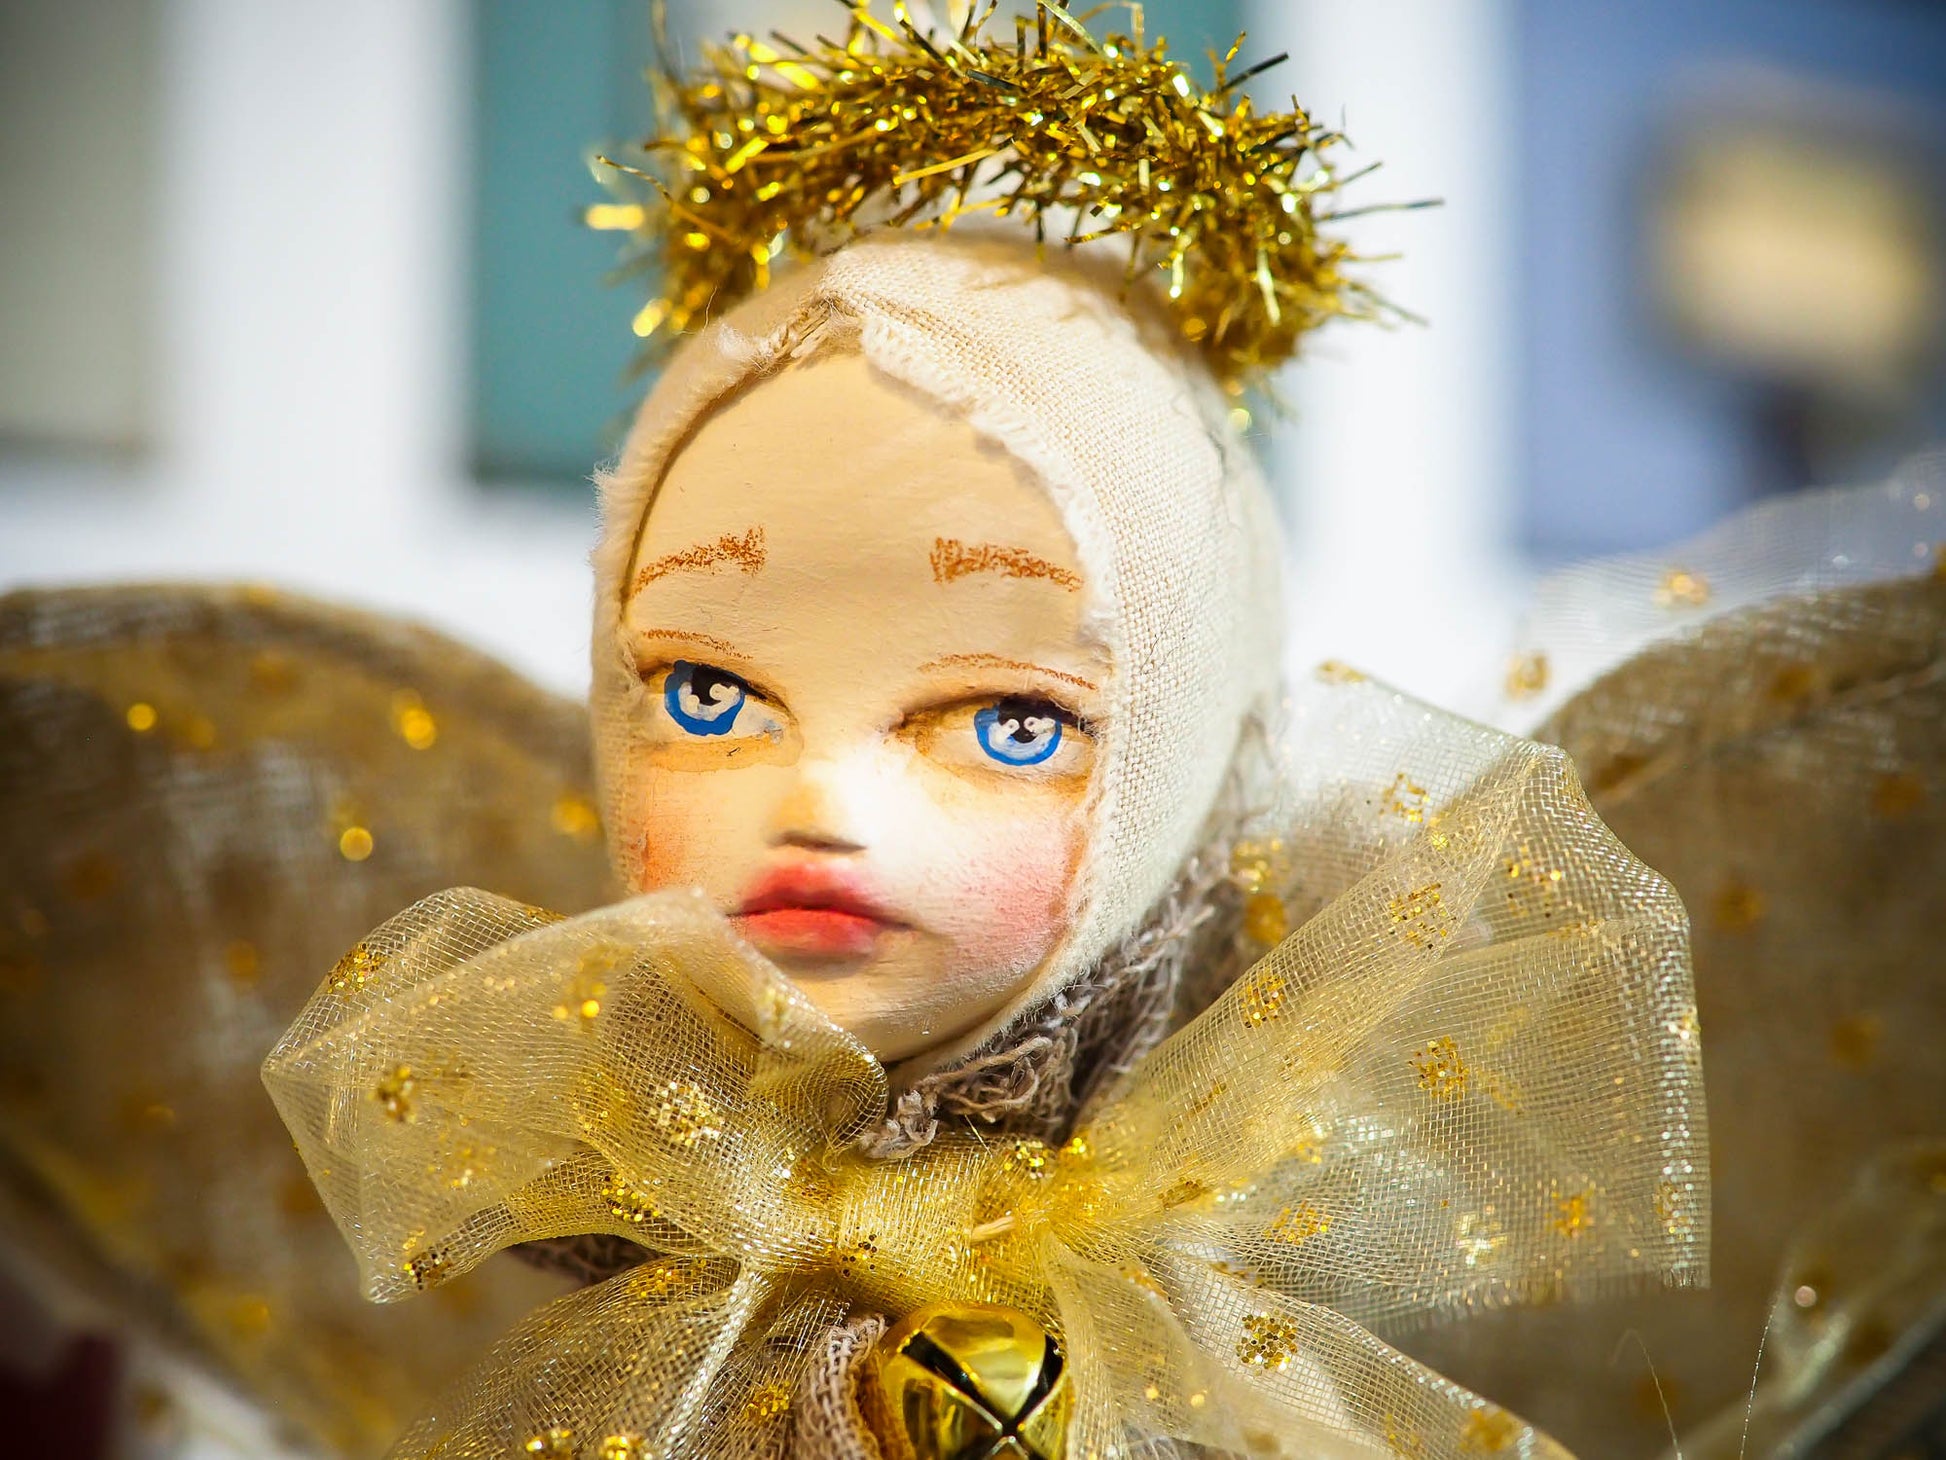 CIELO - Angelic handmade figurine for Christmas tree by Danita Art, Art Doll by Danita Art